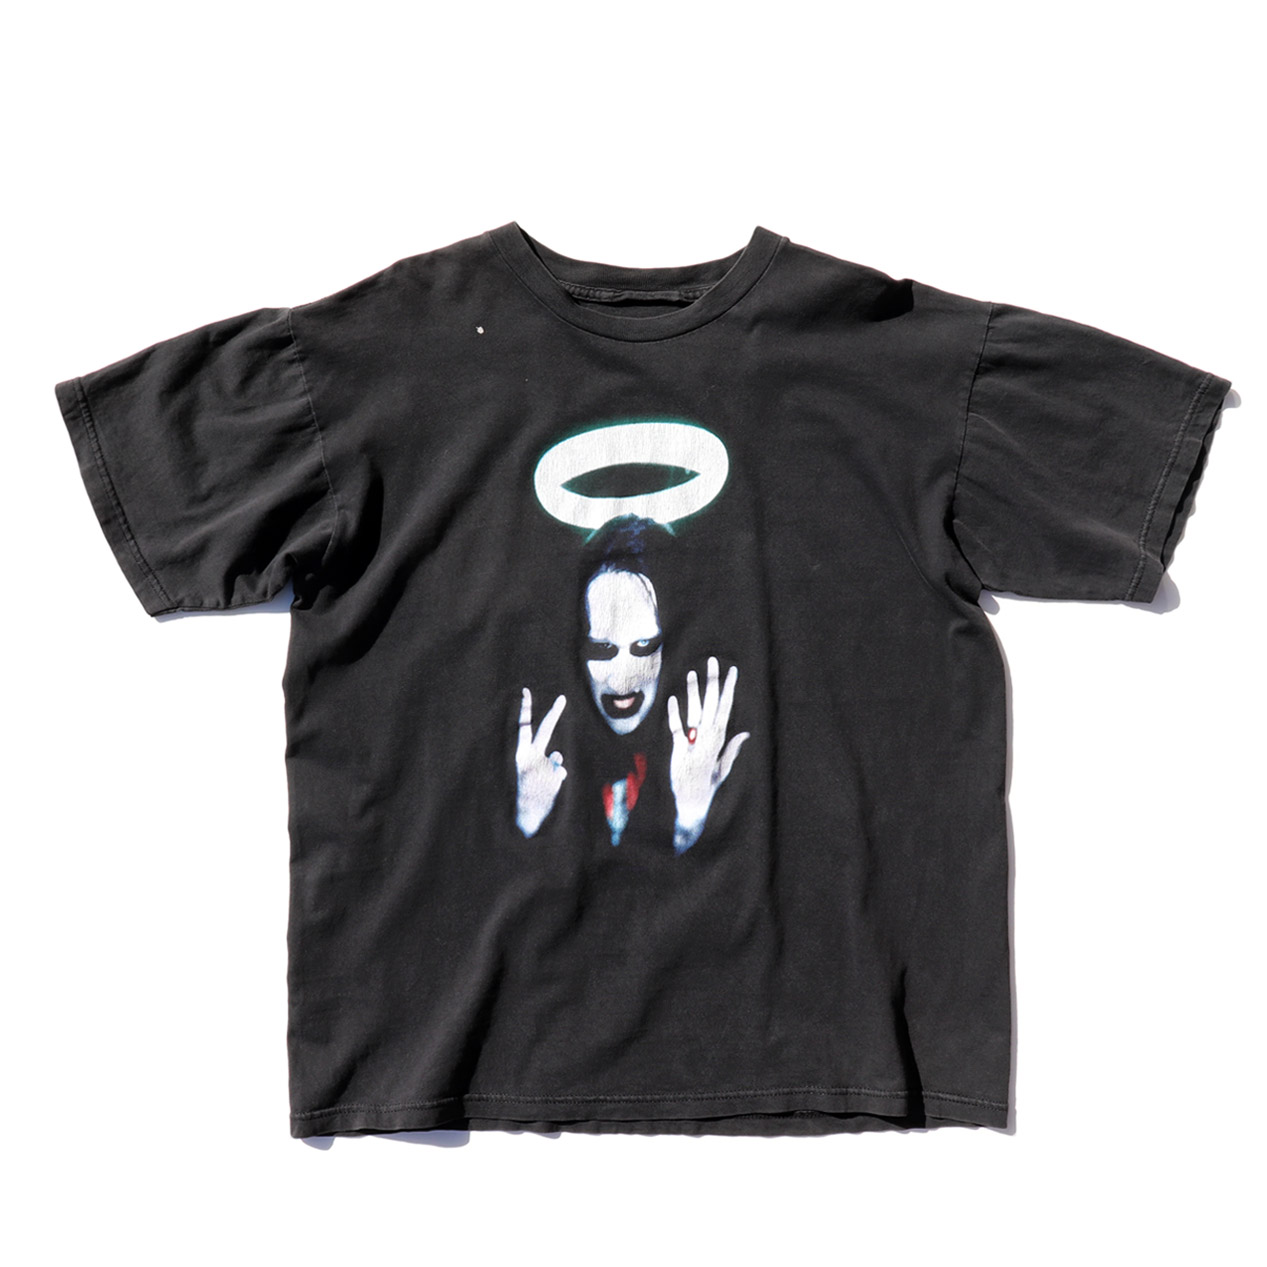 Marilyn Manson 90's vintage tシャツ